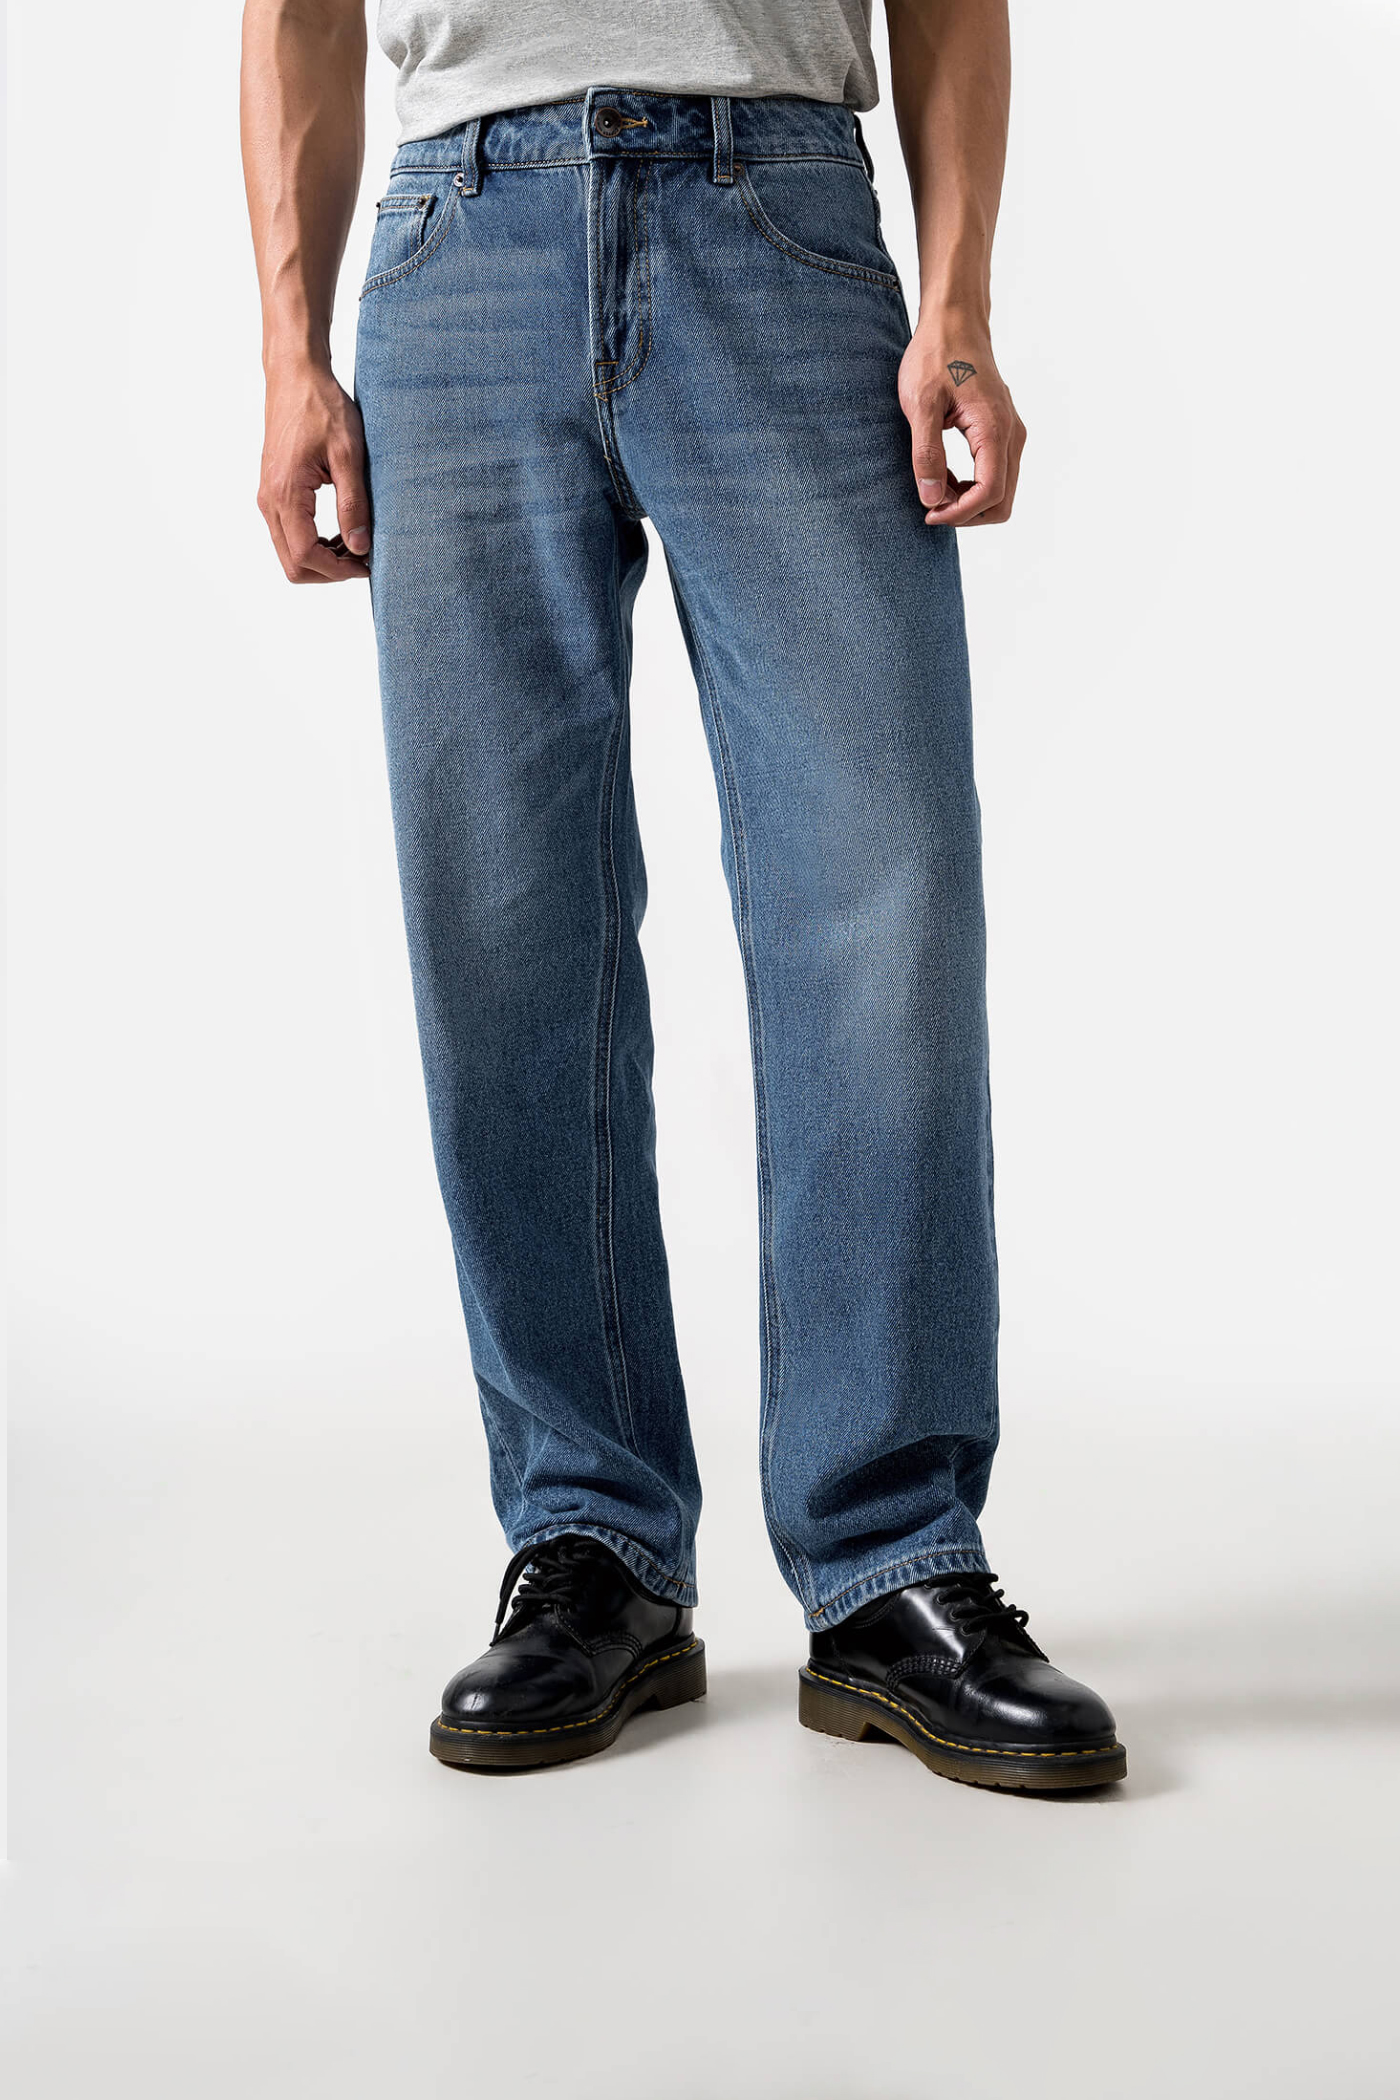 Jeans Copper Denim Straight xanh-nhat